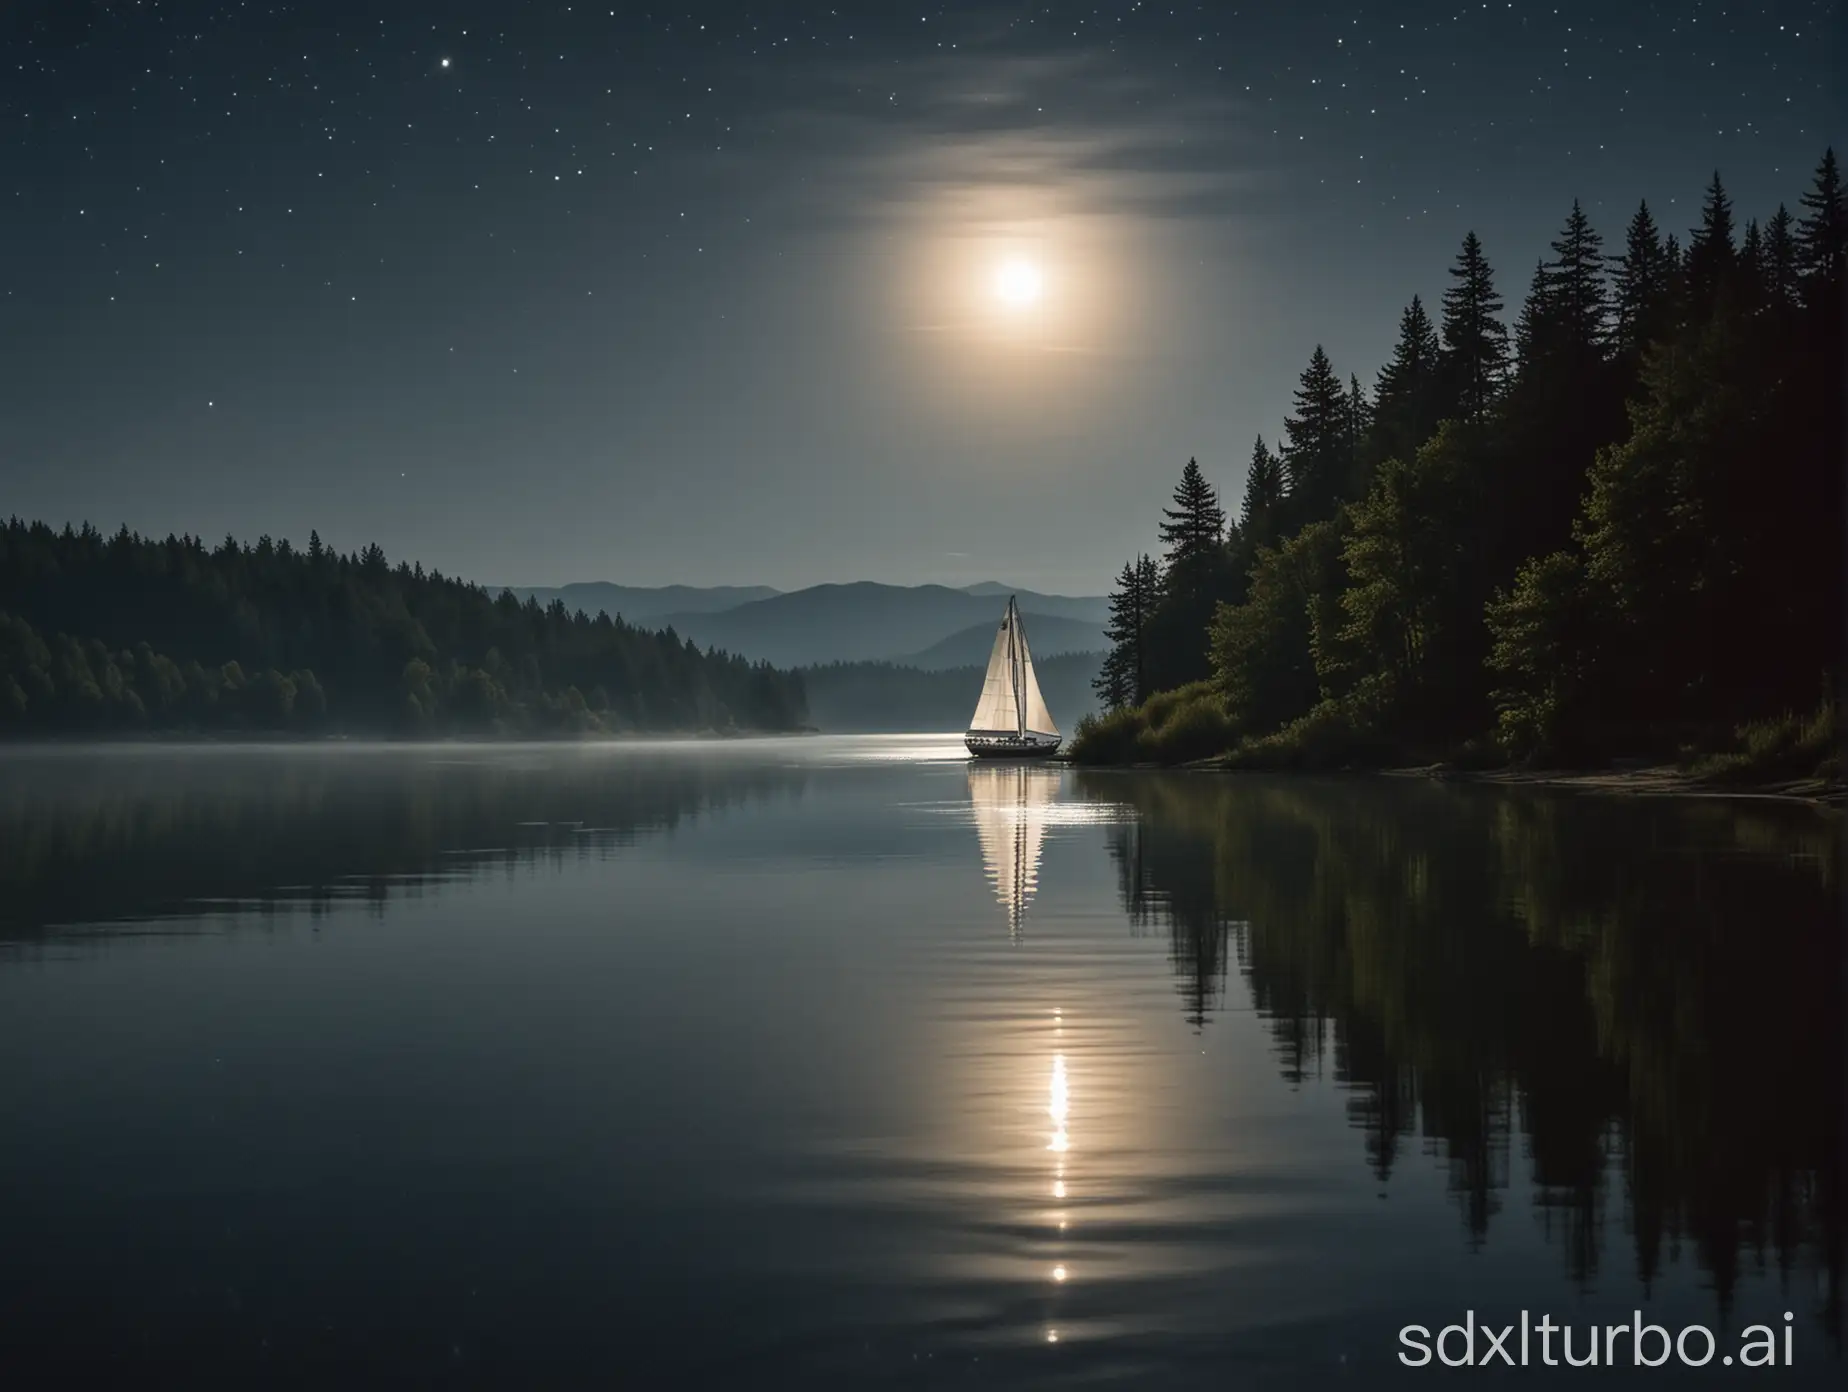 Moonlit-Lake-Scene-with-Sailing-Boat